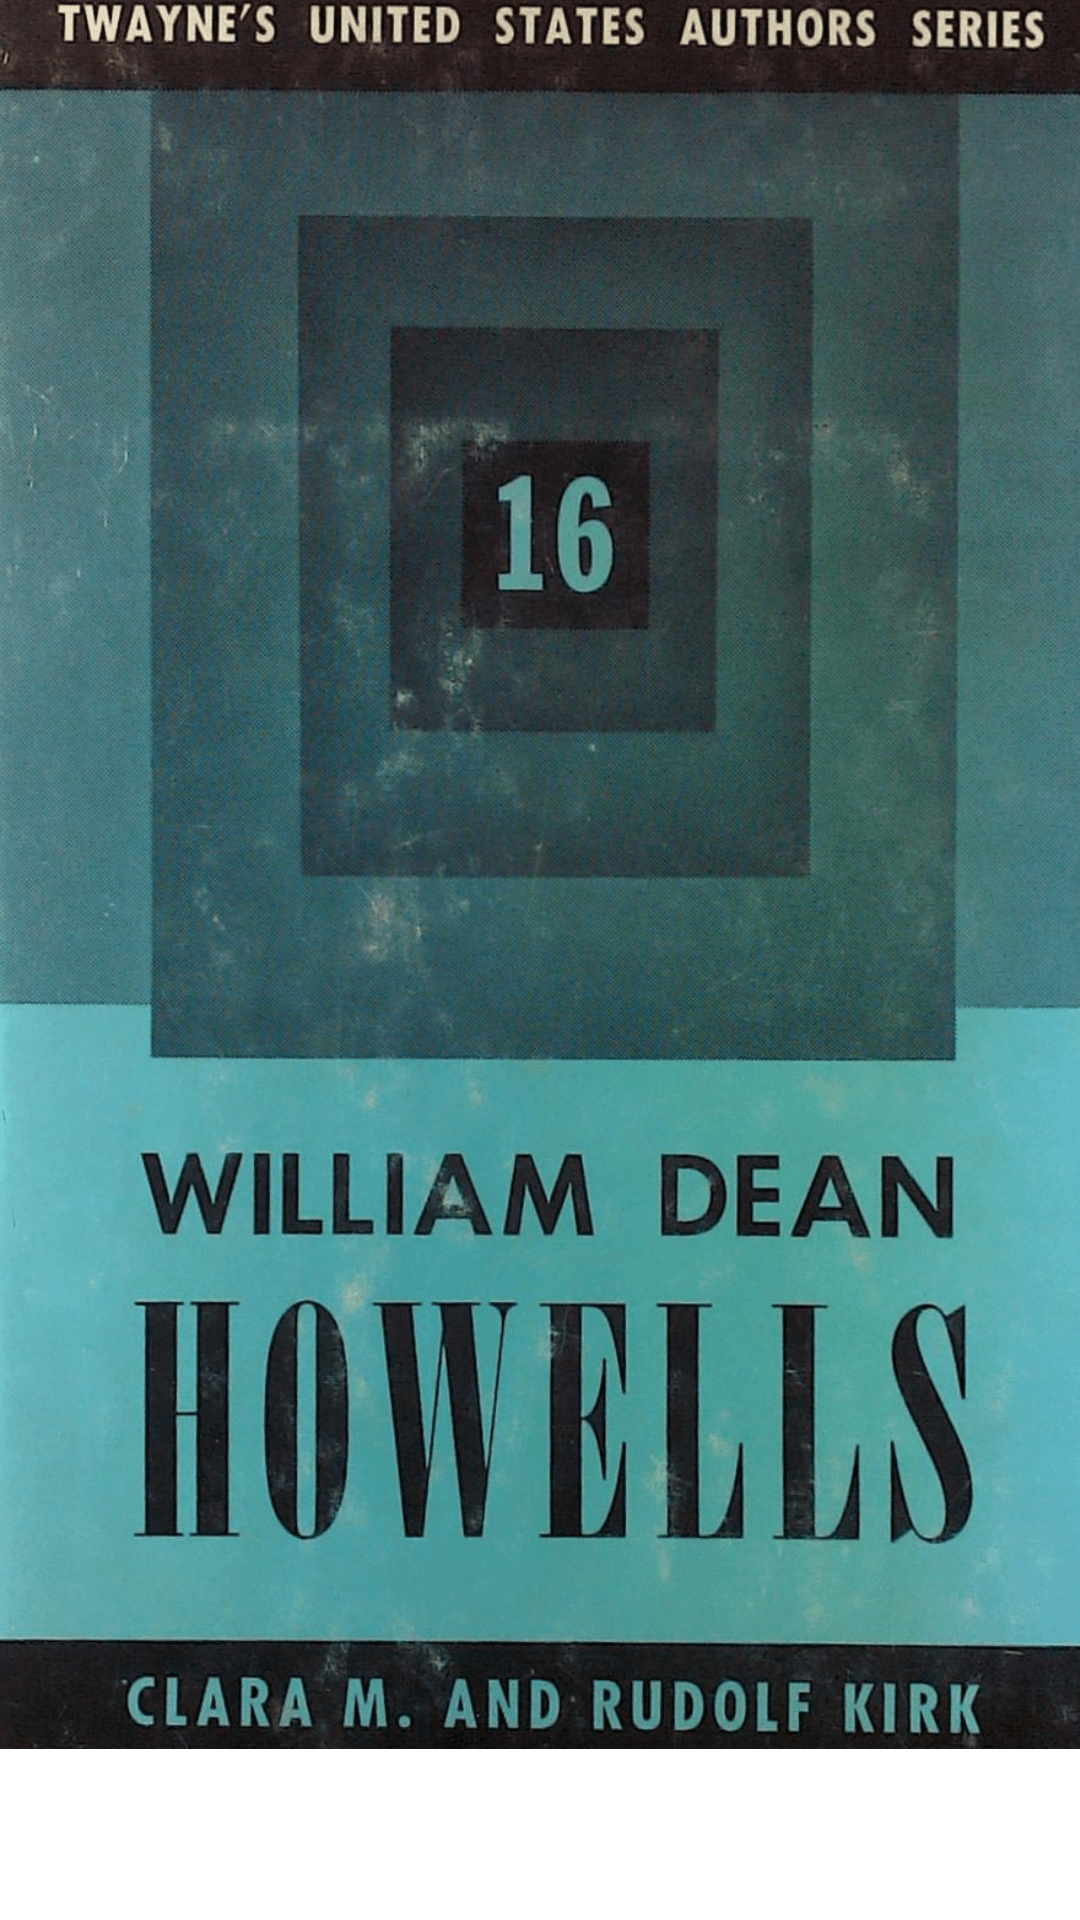 William Dean Howells by Clara M. Kirk